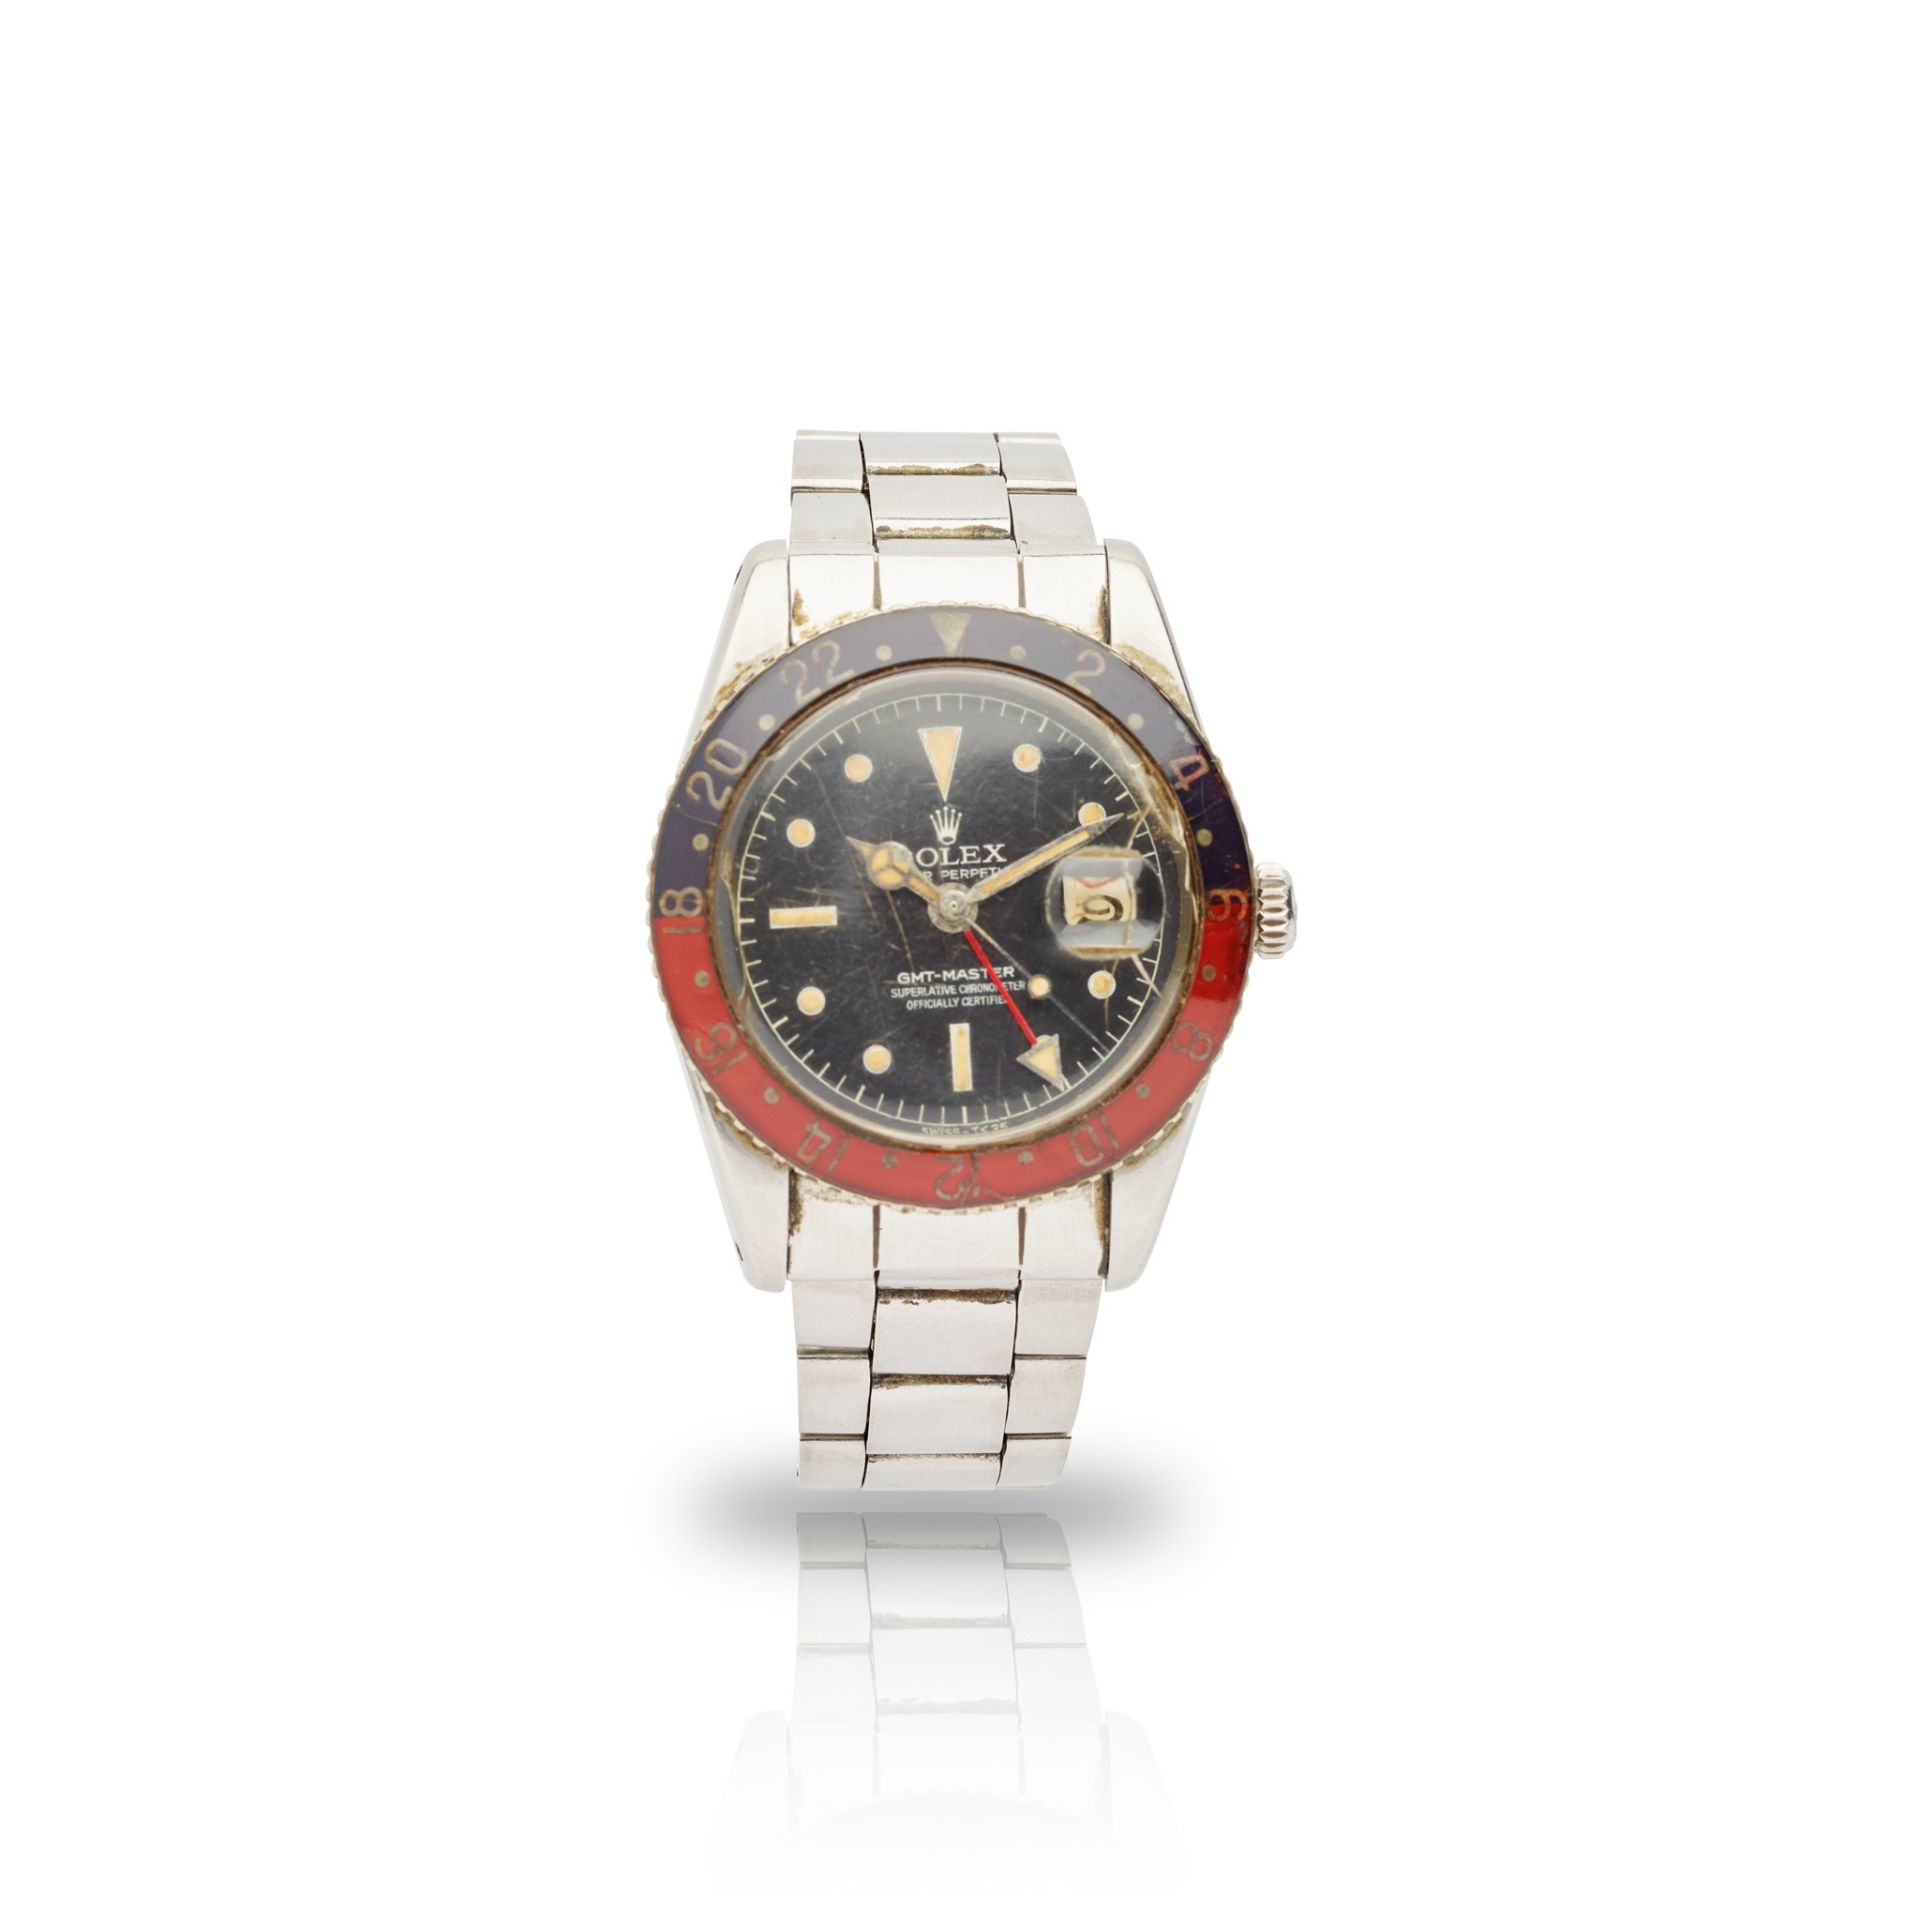 Rolex: a rare GMT Master wrist watch